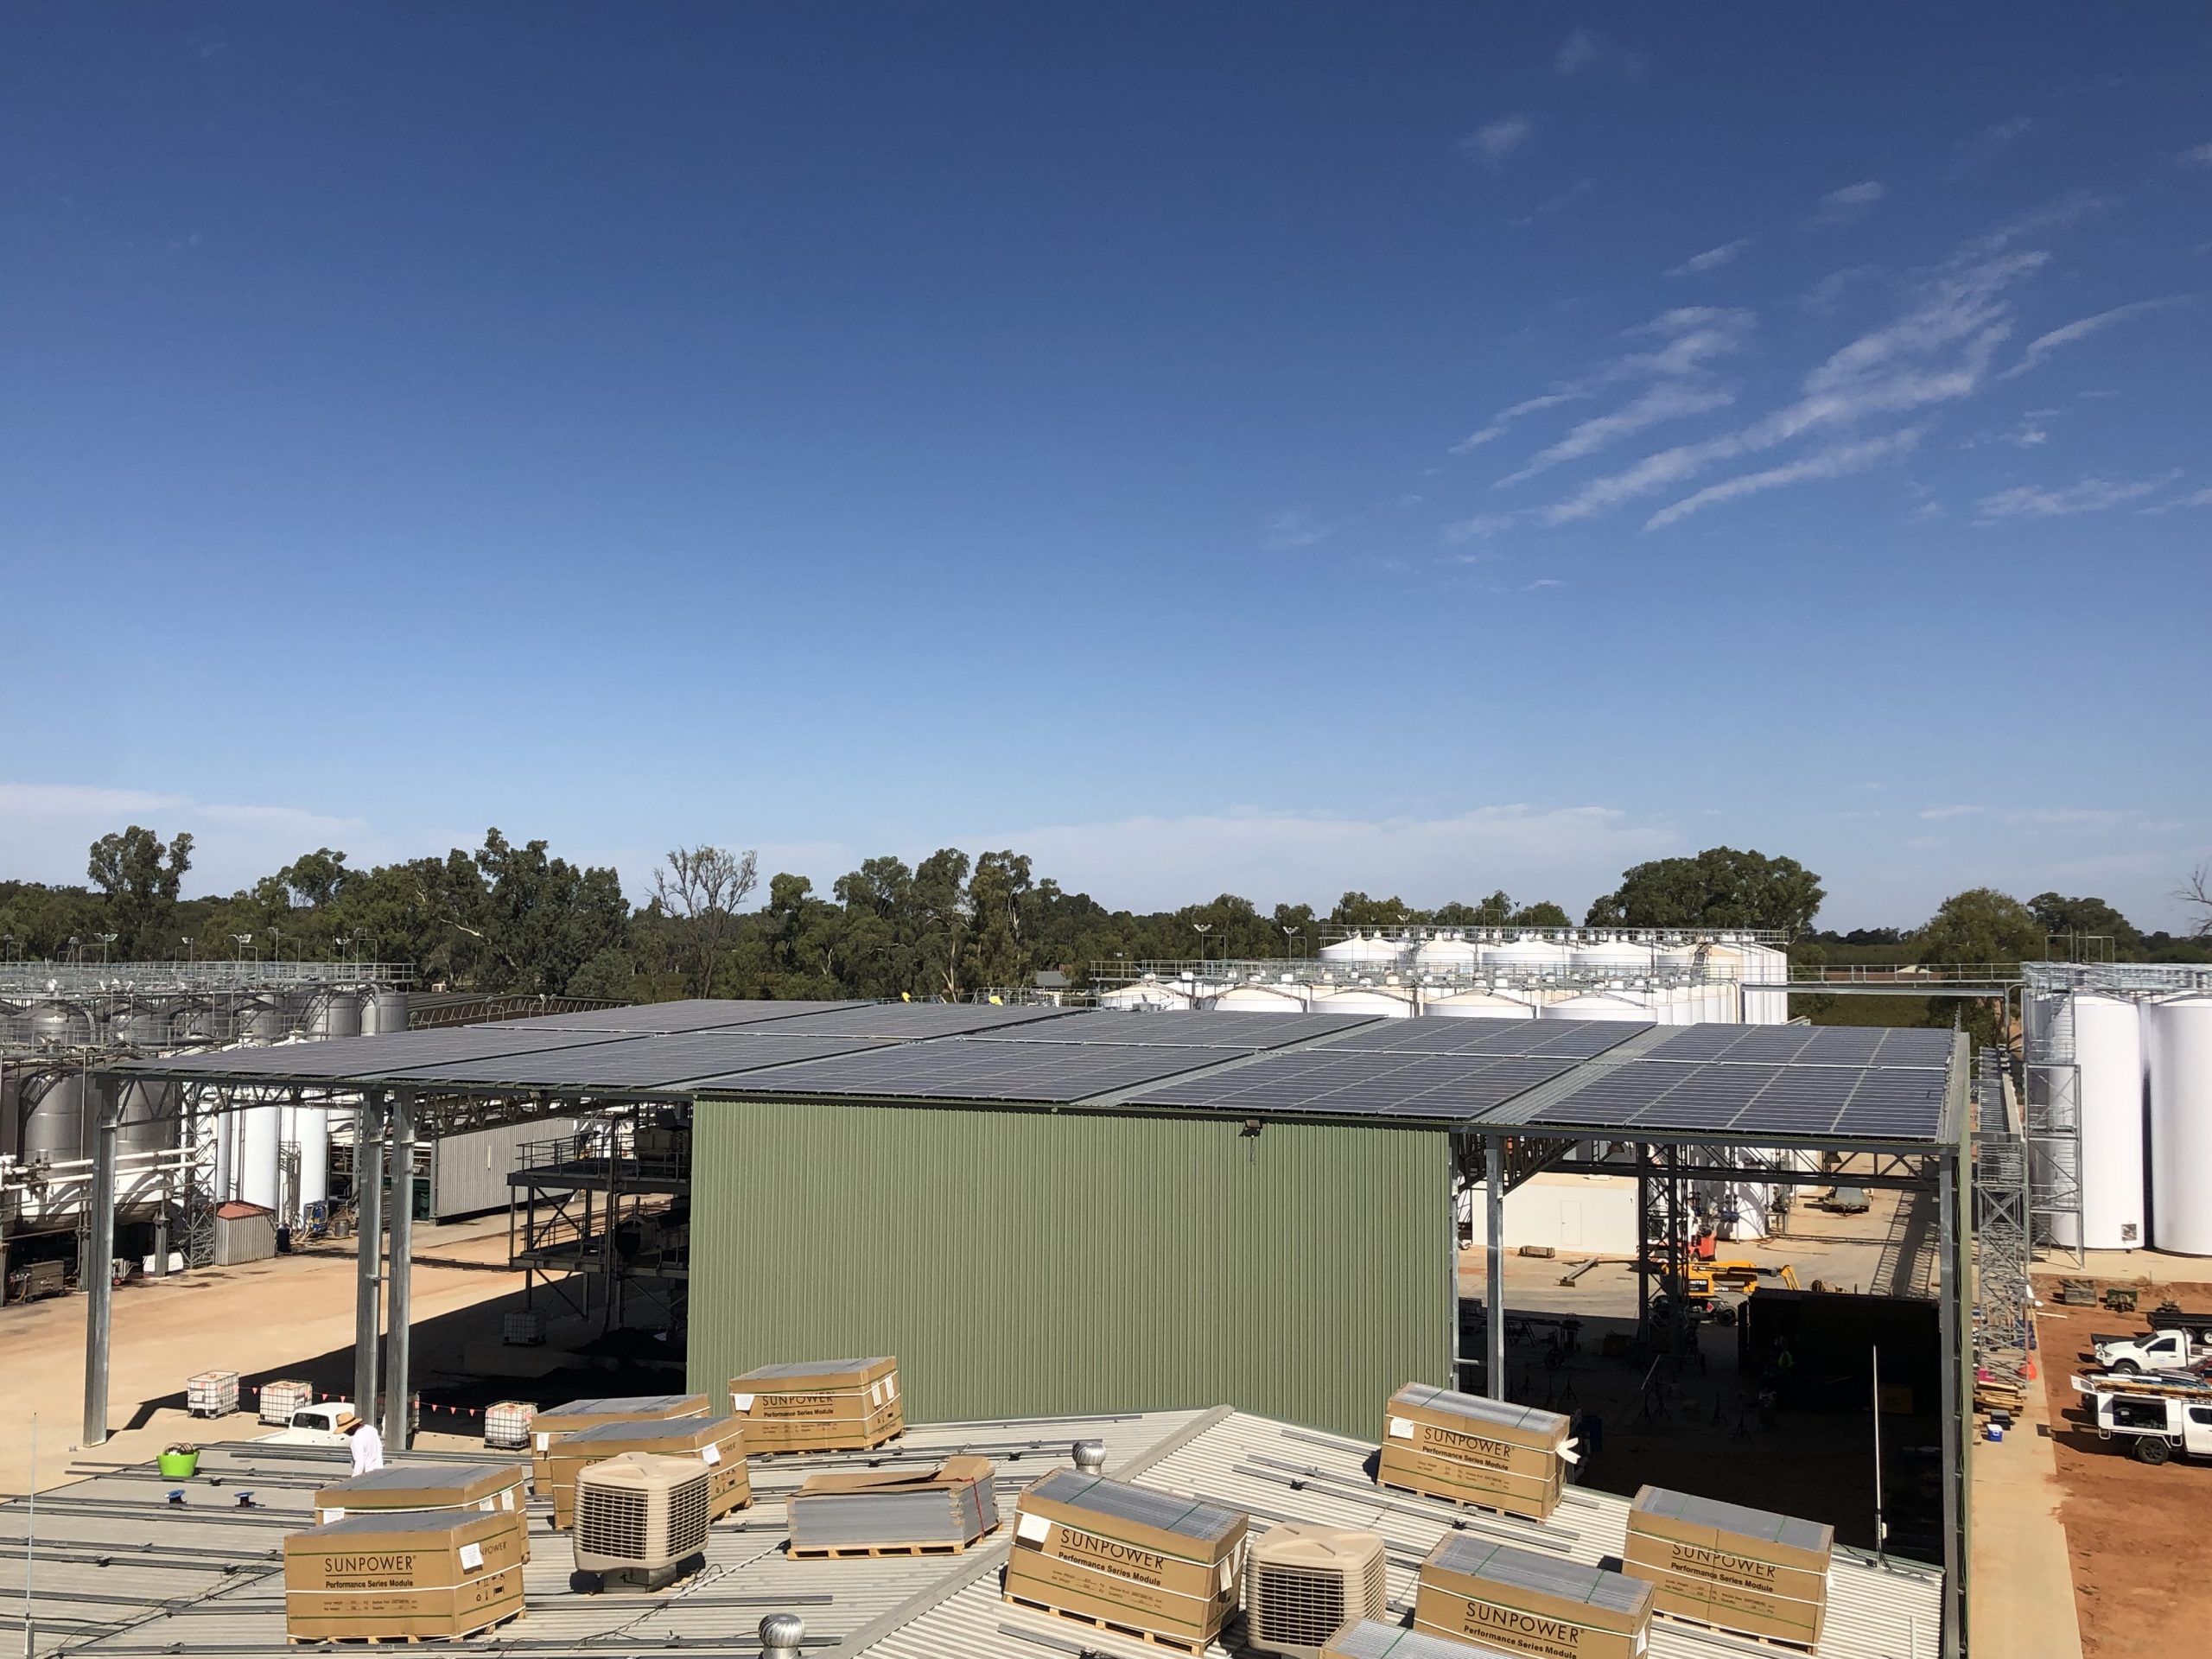 Commercial solar panels near large tanks